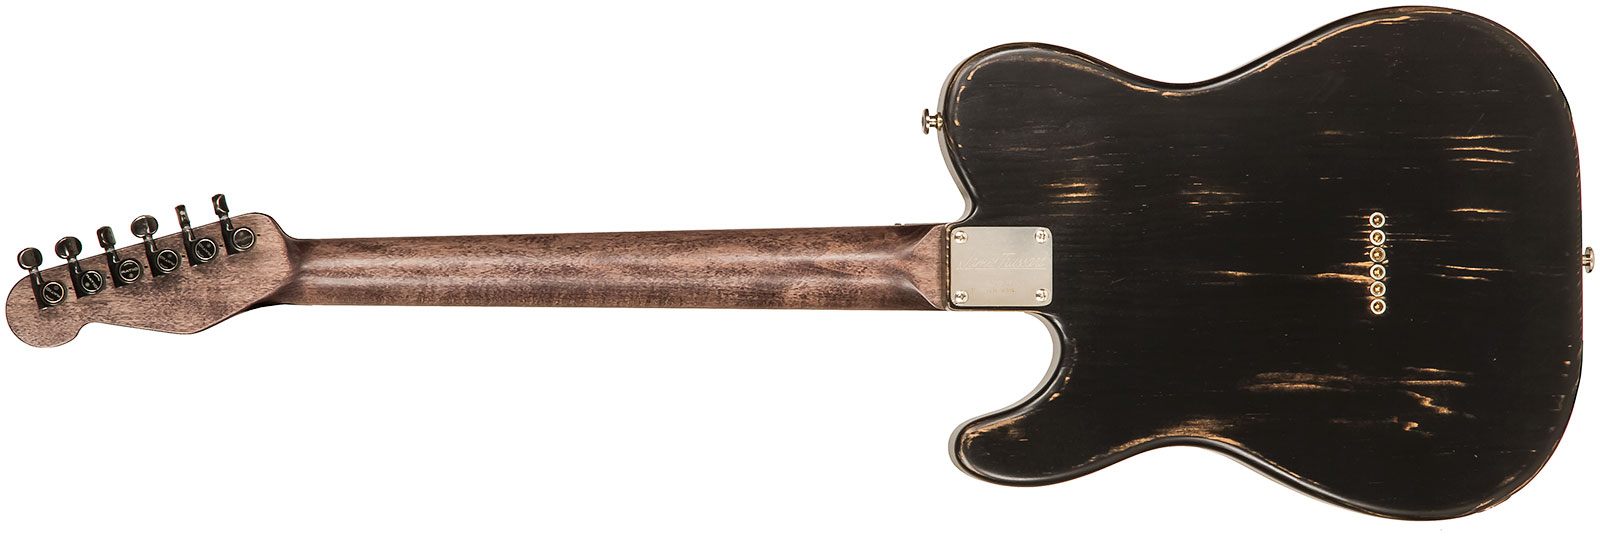 James Trussart Steeltopcaster Sh Ht Eb #21135 - Antique Silver Paisley - Guitarra eléctrica con forma de tel - Variation 1